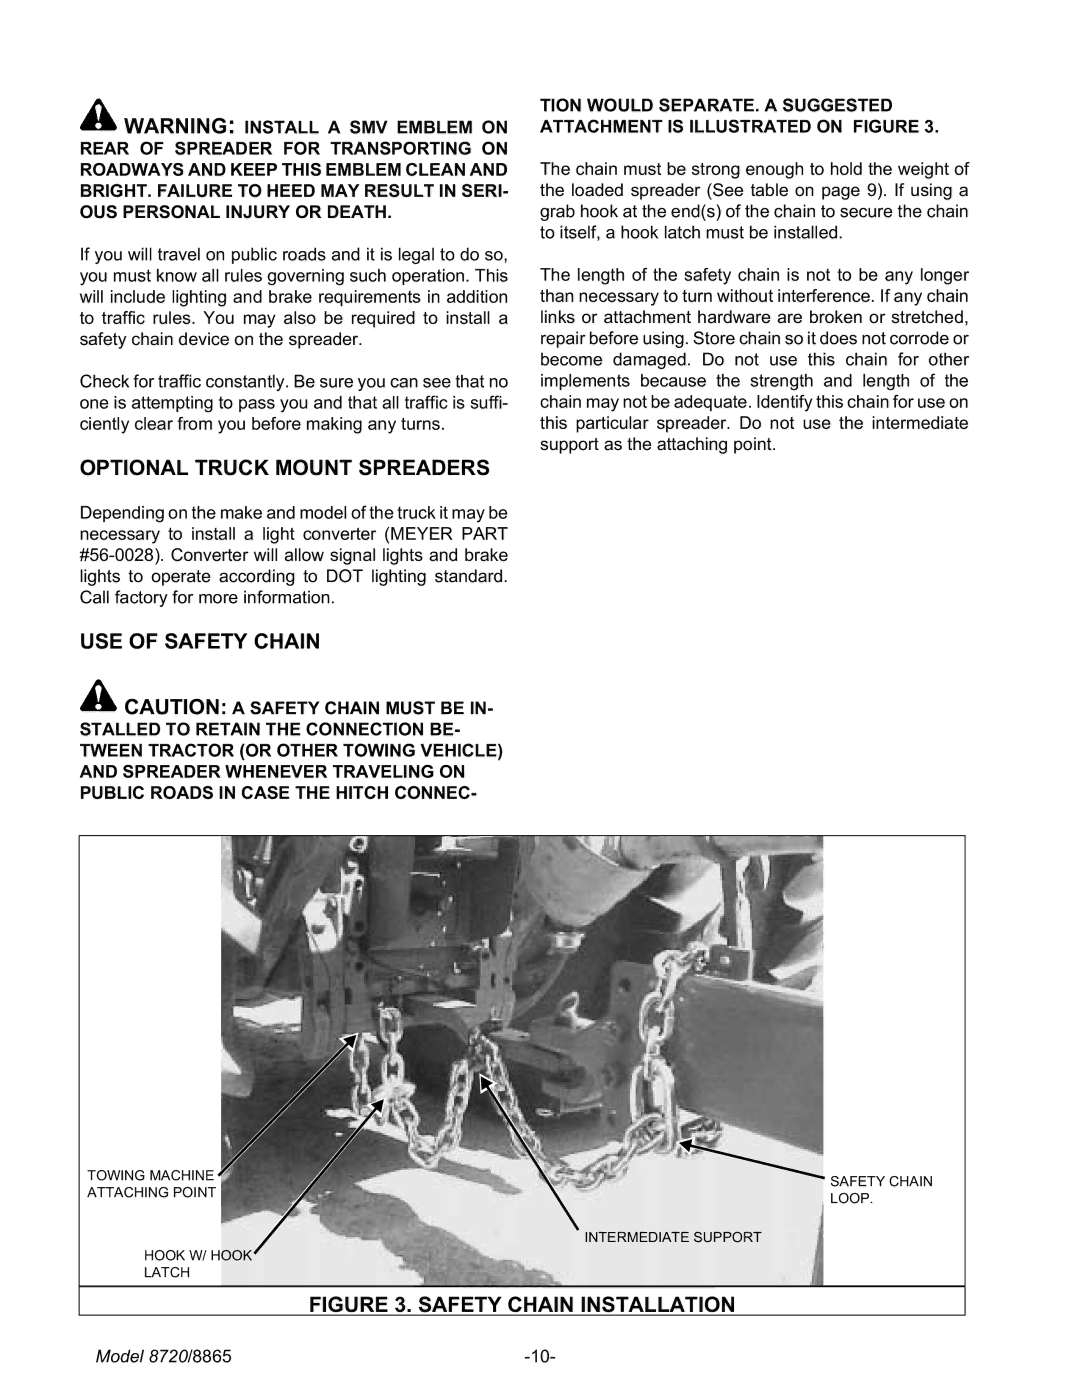 Meyer 8720, 8865 manual Safety Chain Installation 